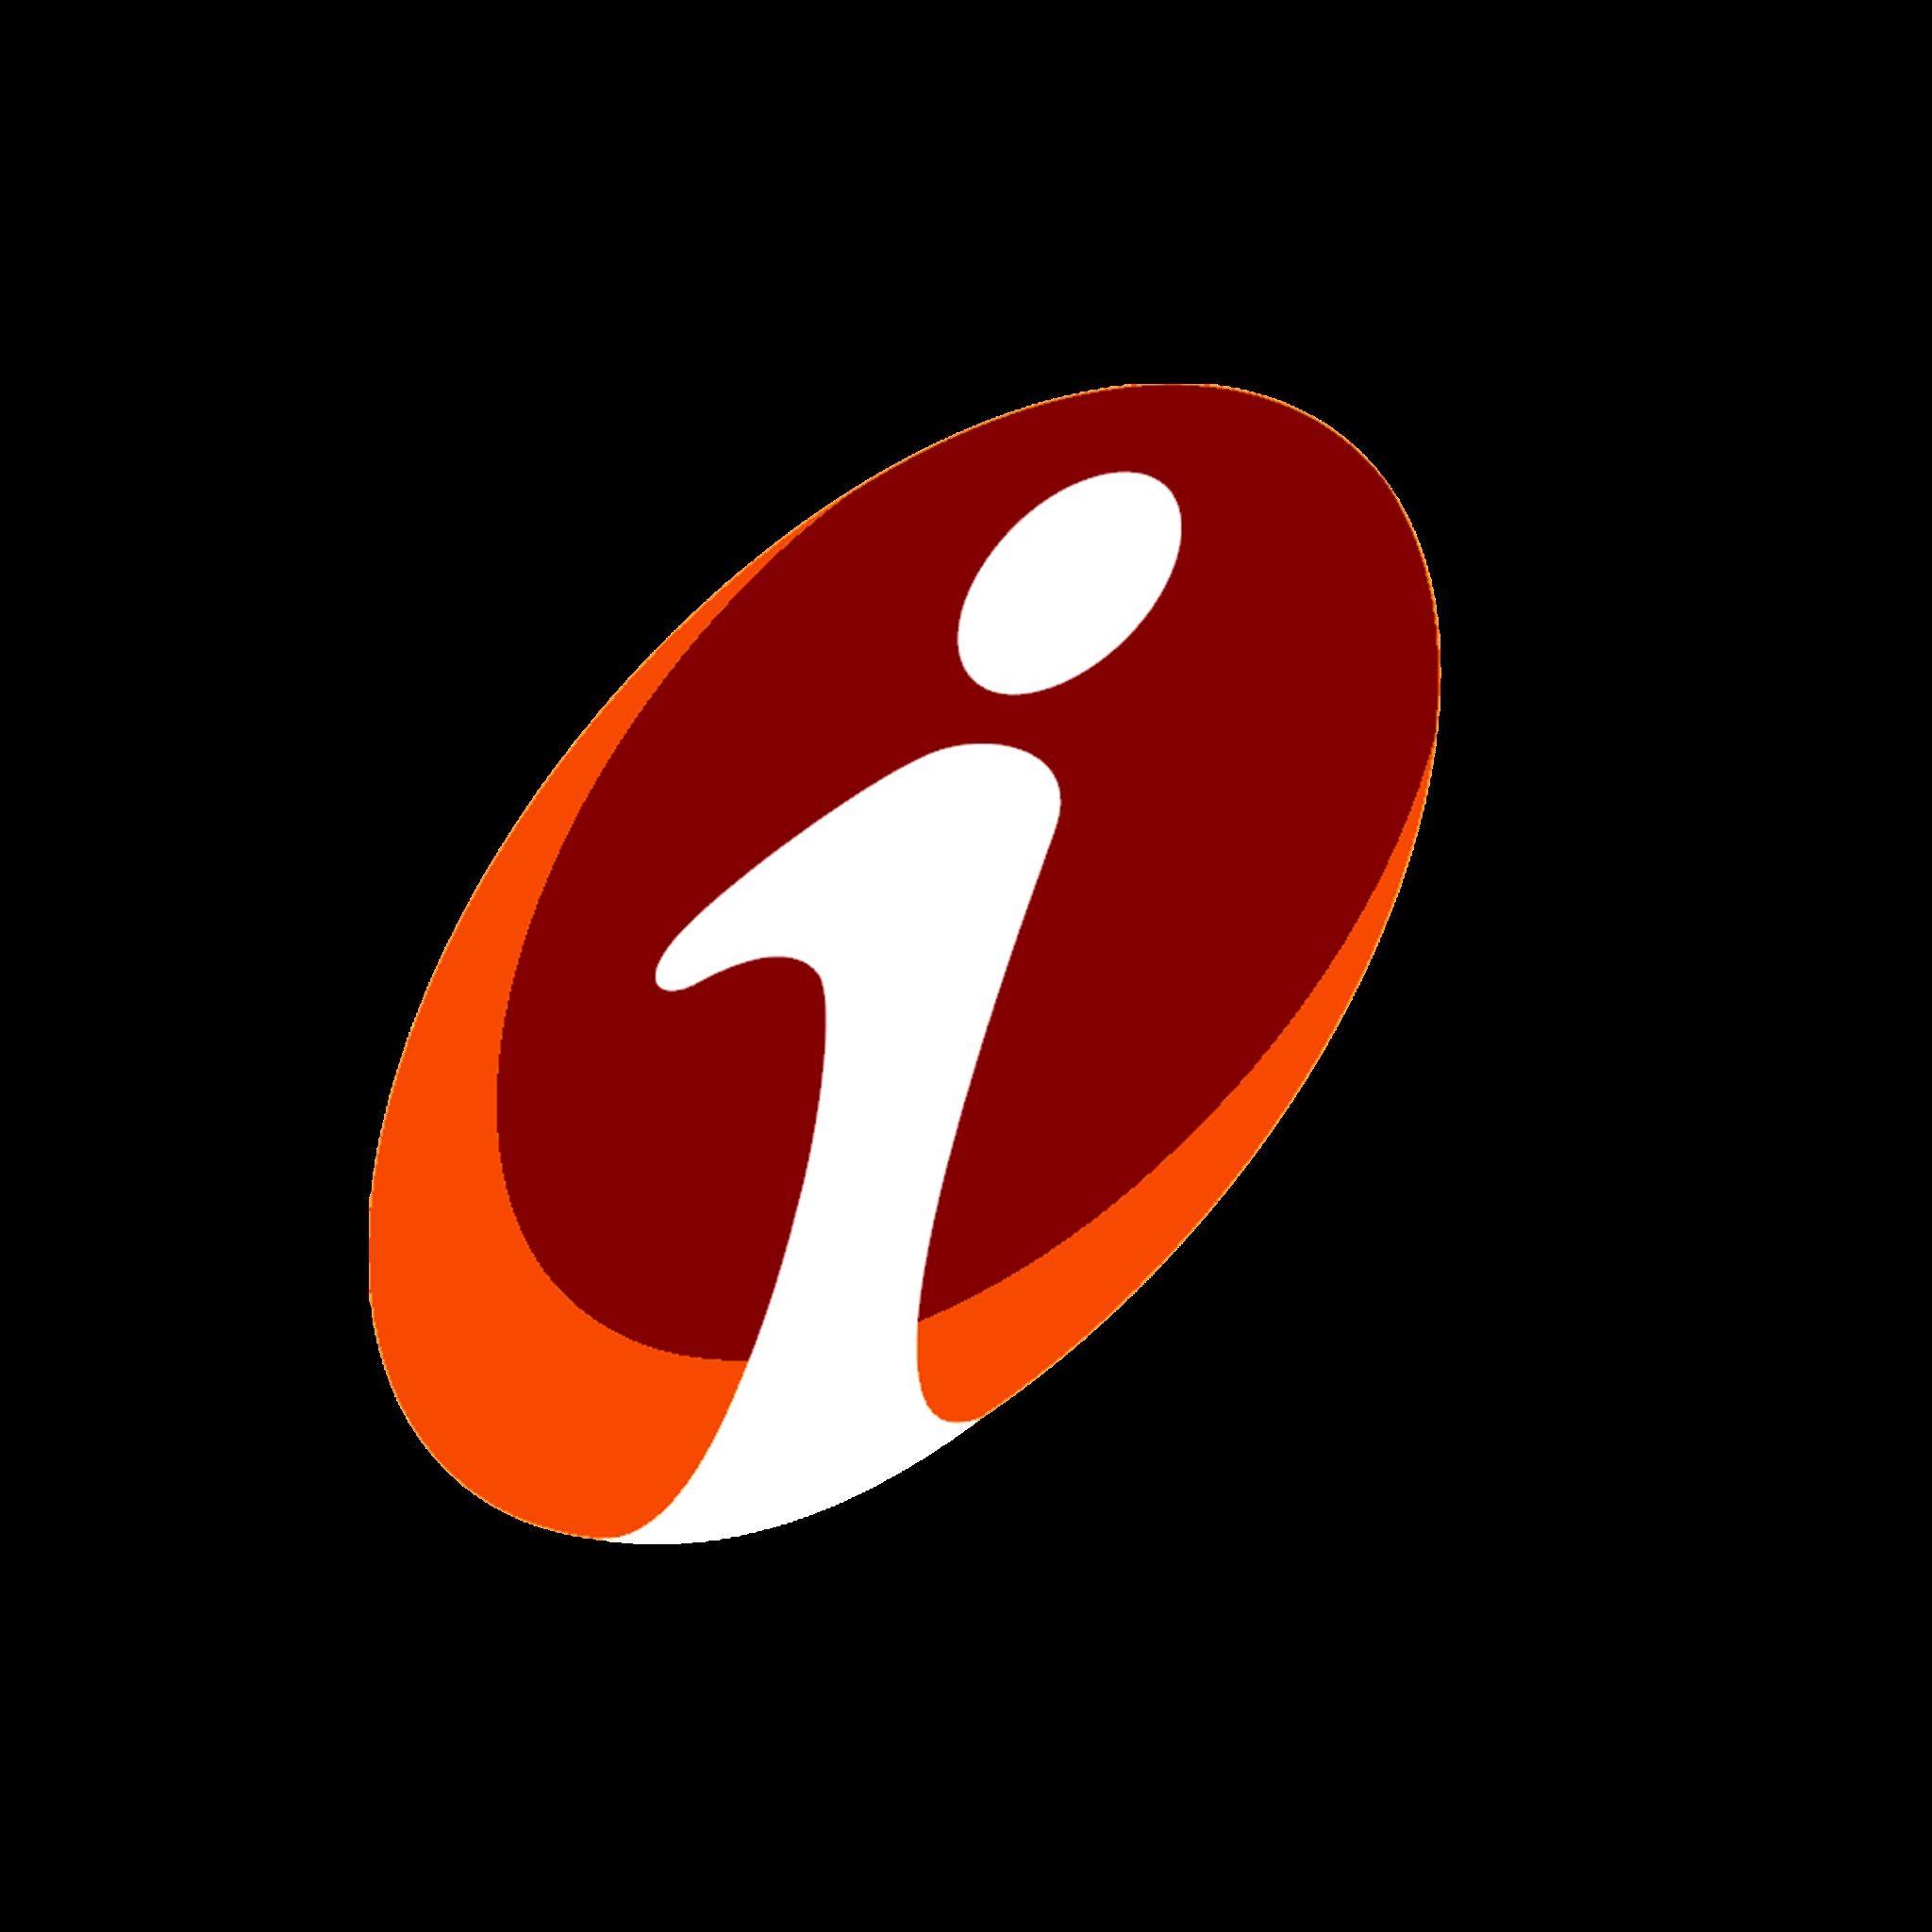 ICICI Bank Logo - ICICI Bank — 29 Investments, Portfolio ...